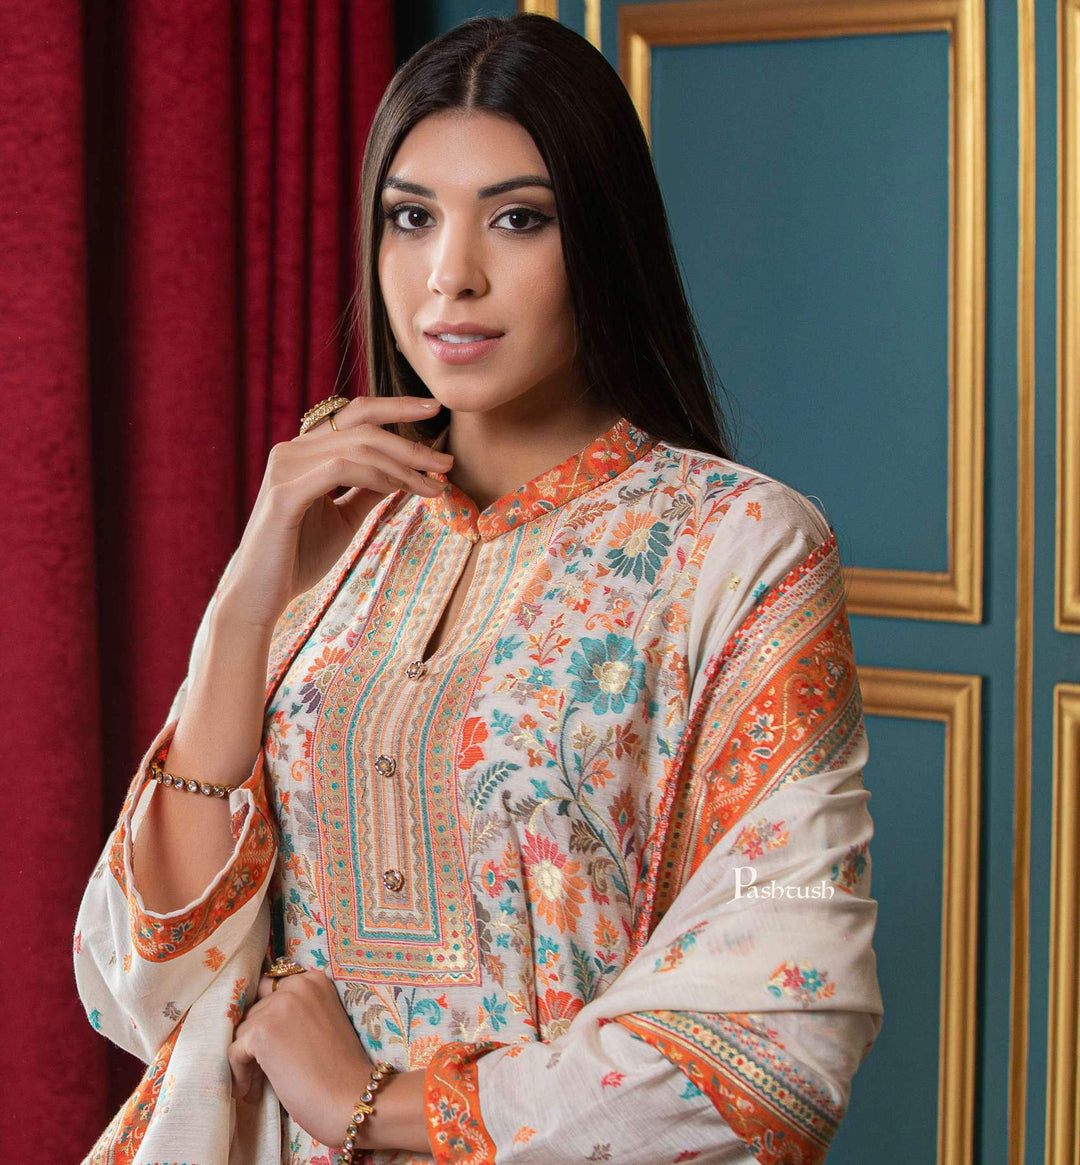 Pashtush India suit Pashtush Womens Ethnic Weave Cotton-Silk Unstitched Suit, Pastel Hues